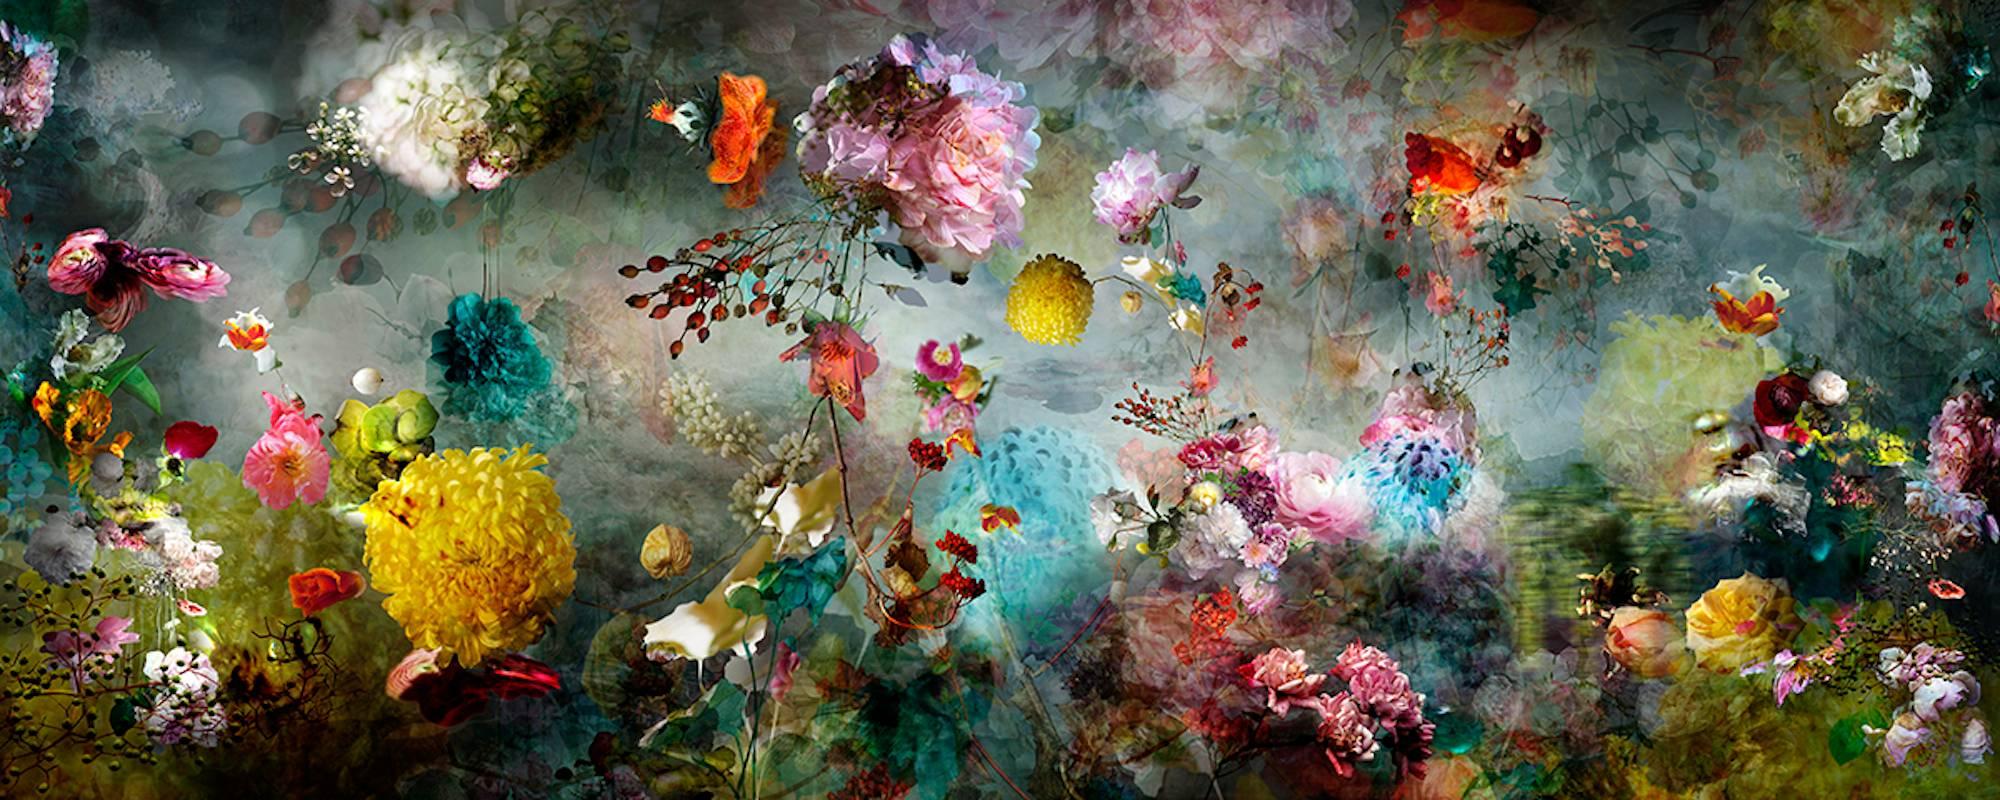 Isabelle Menin Color Photograph – Song for Dead Heroes #12 Pastellfarbenes abstraktes Blumenstillleben-Foto in Pastell